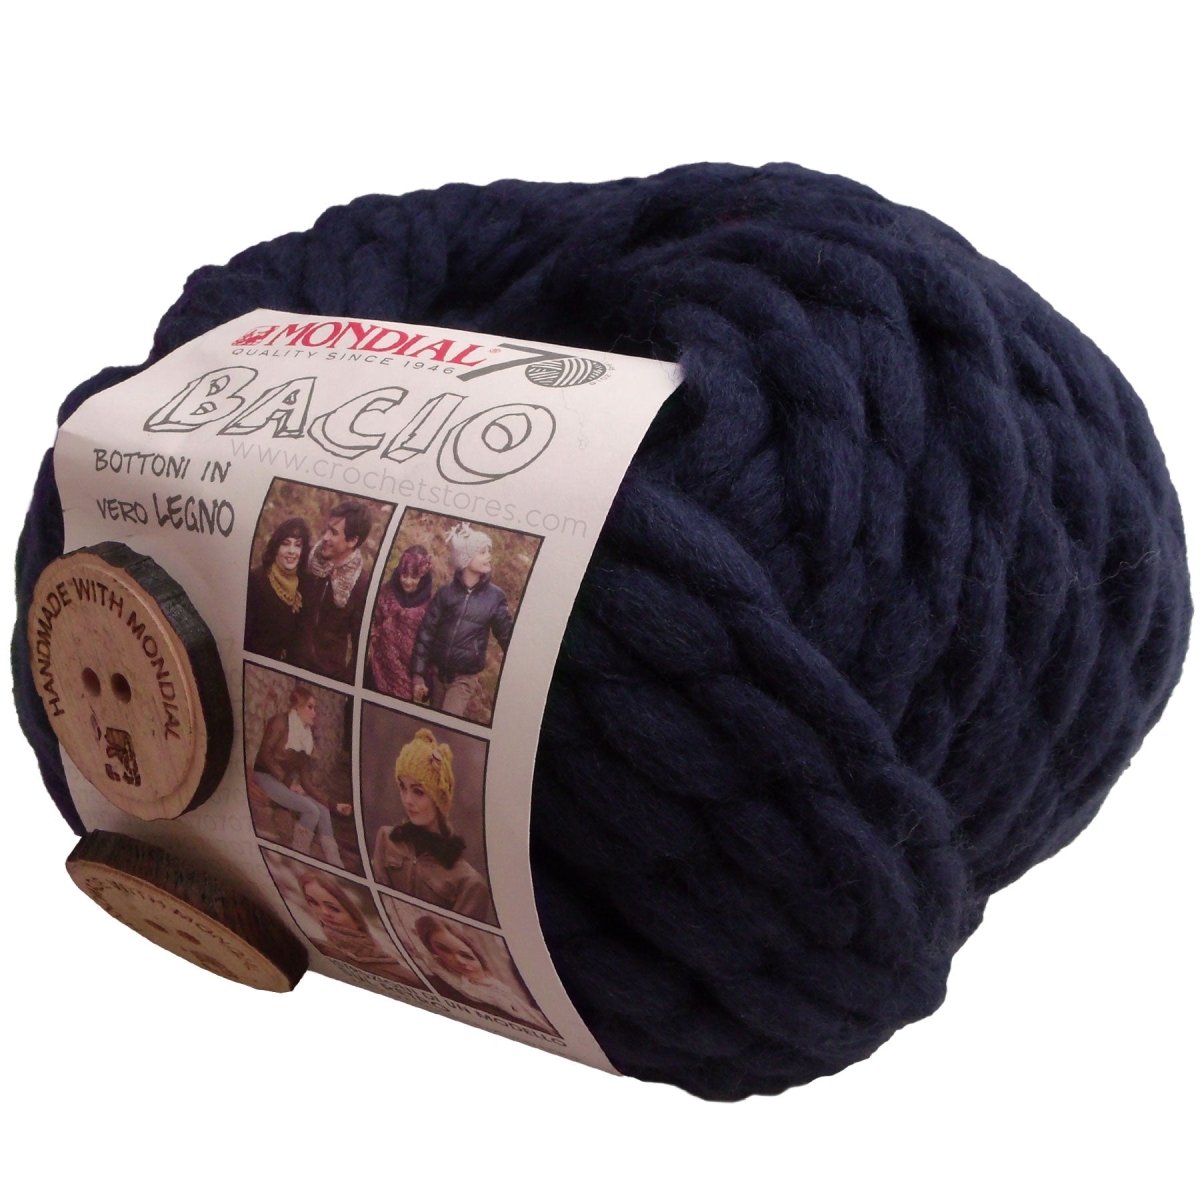 BACIO - Crochetstores12019988020586411504